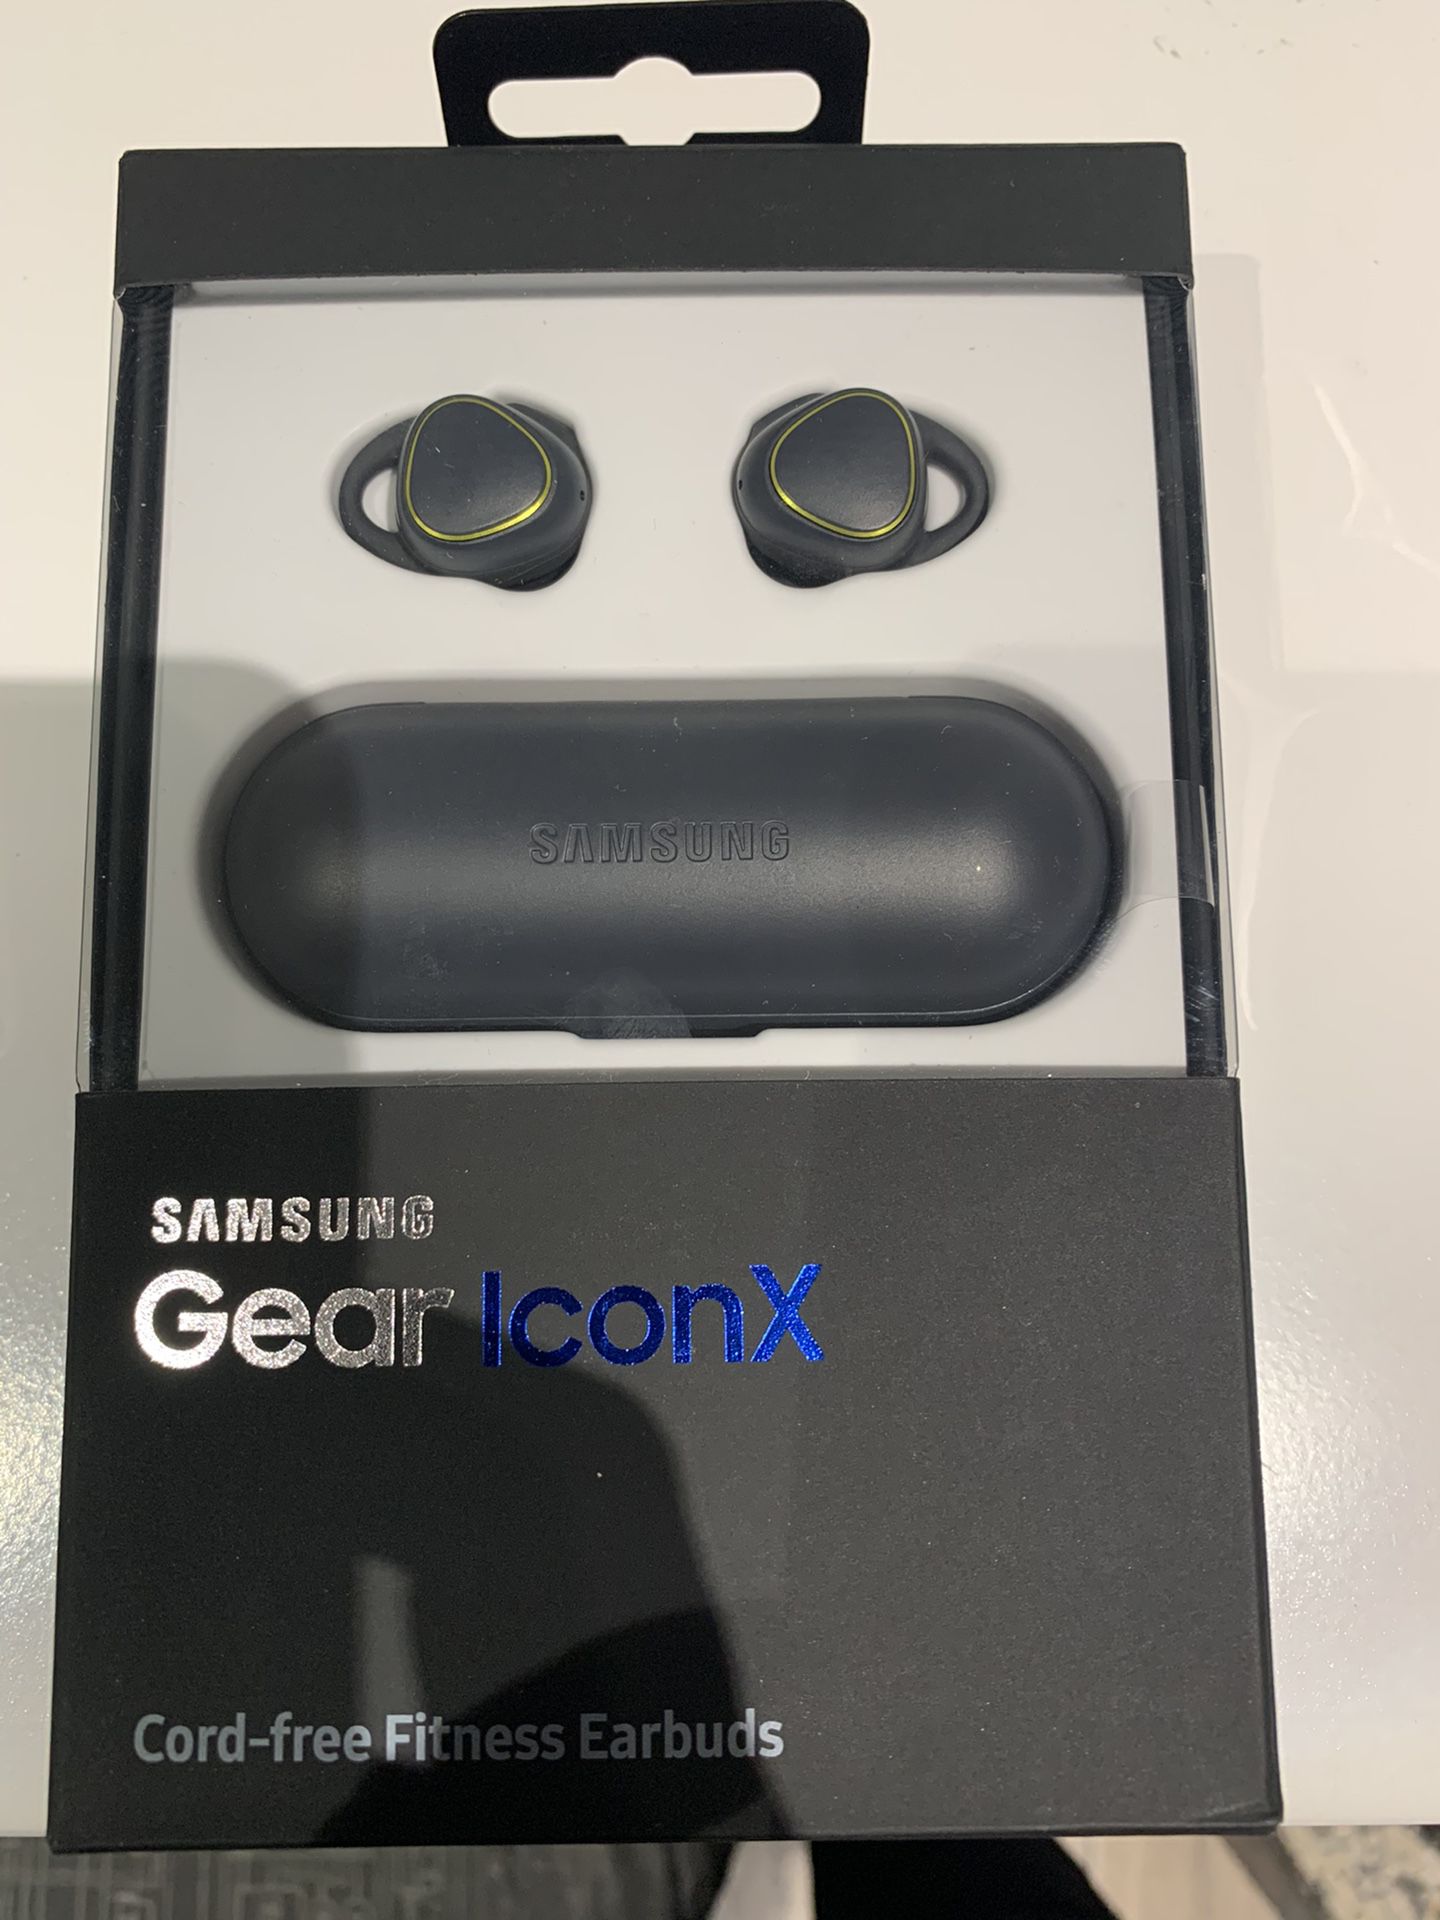 Samsung gear Icon X